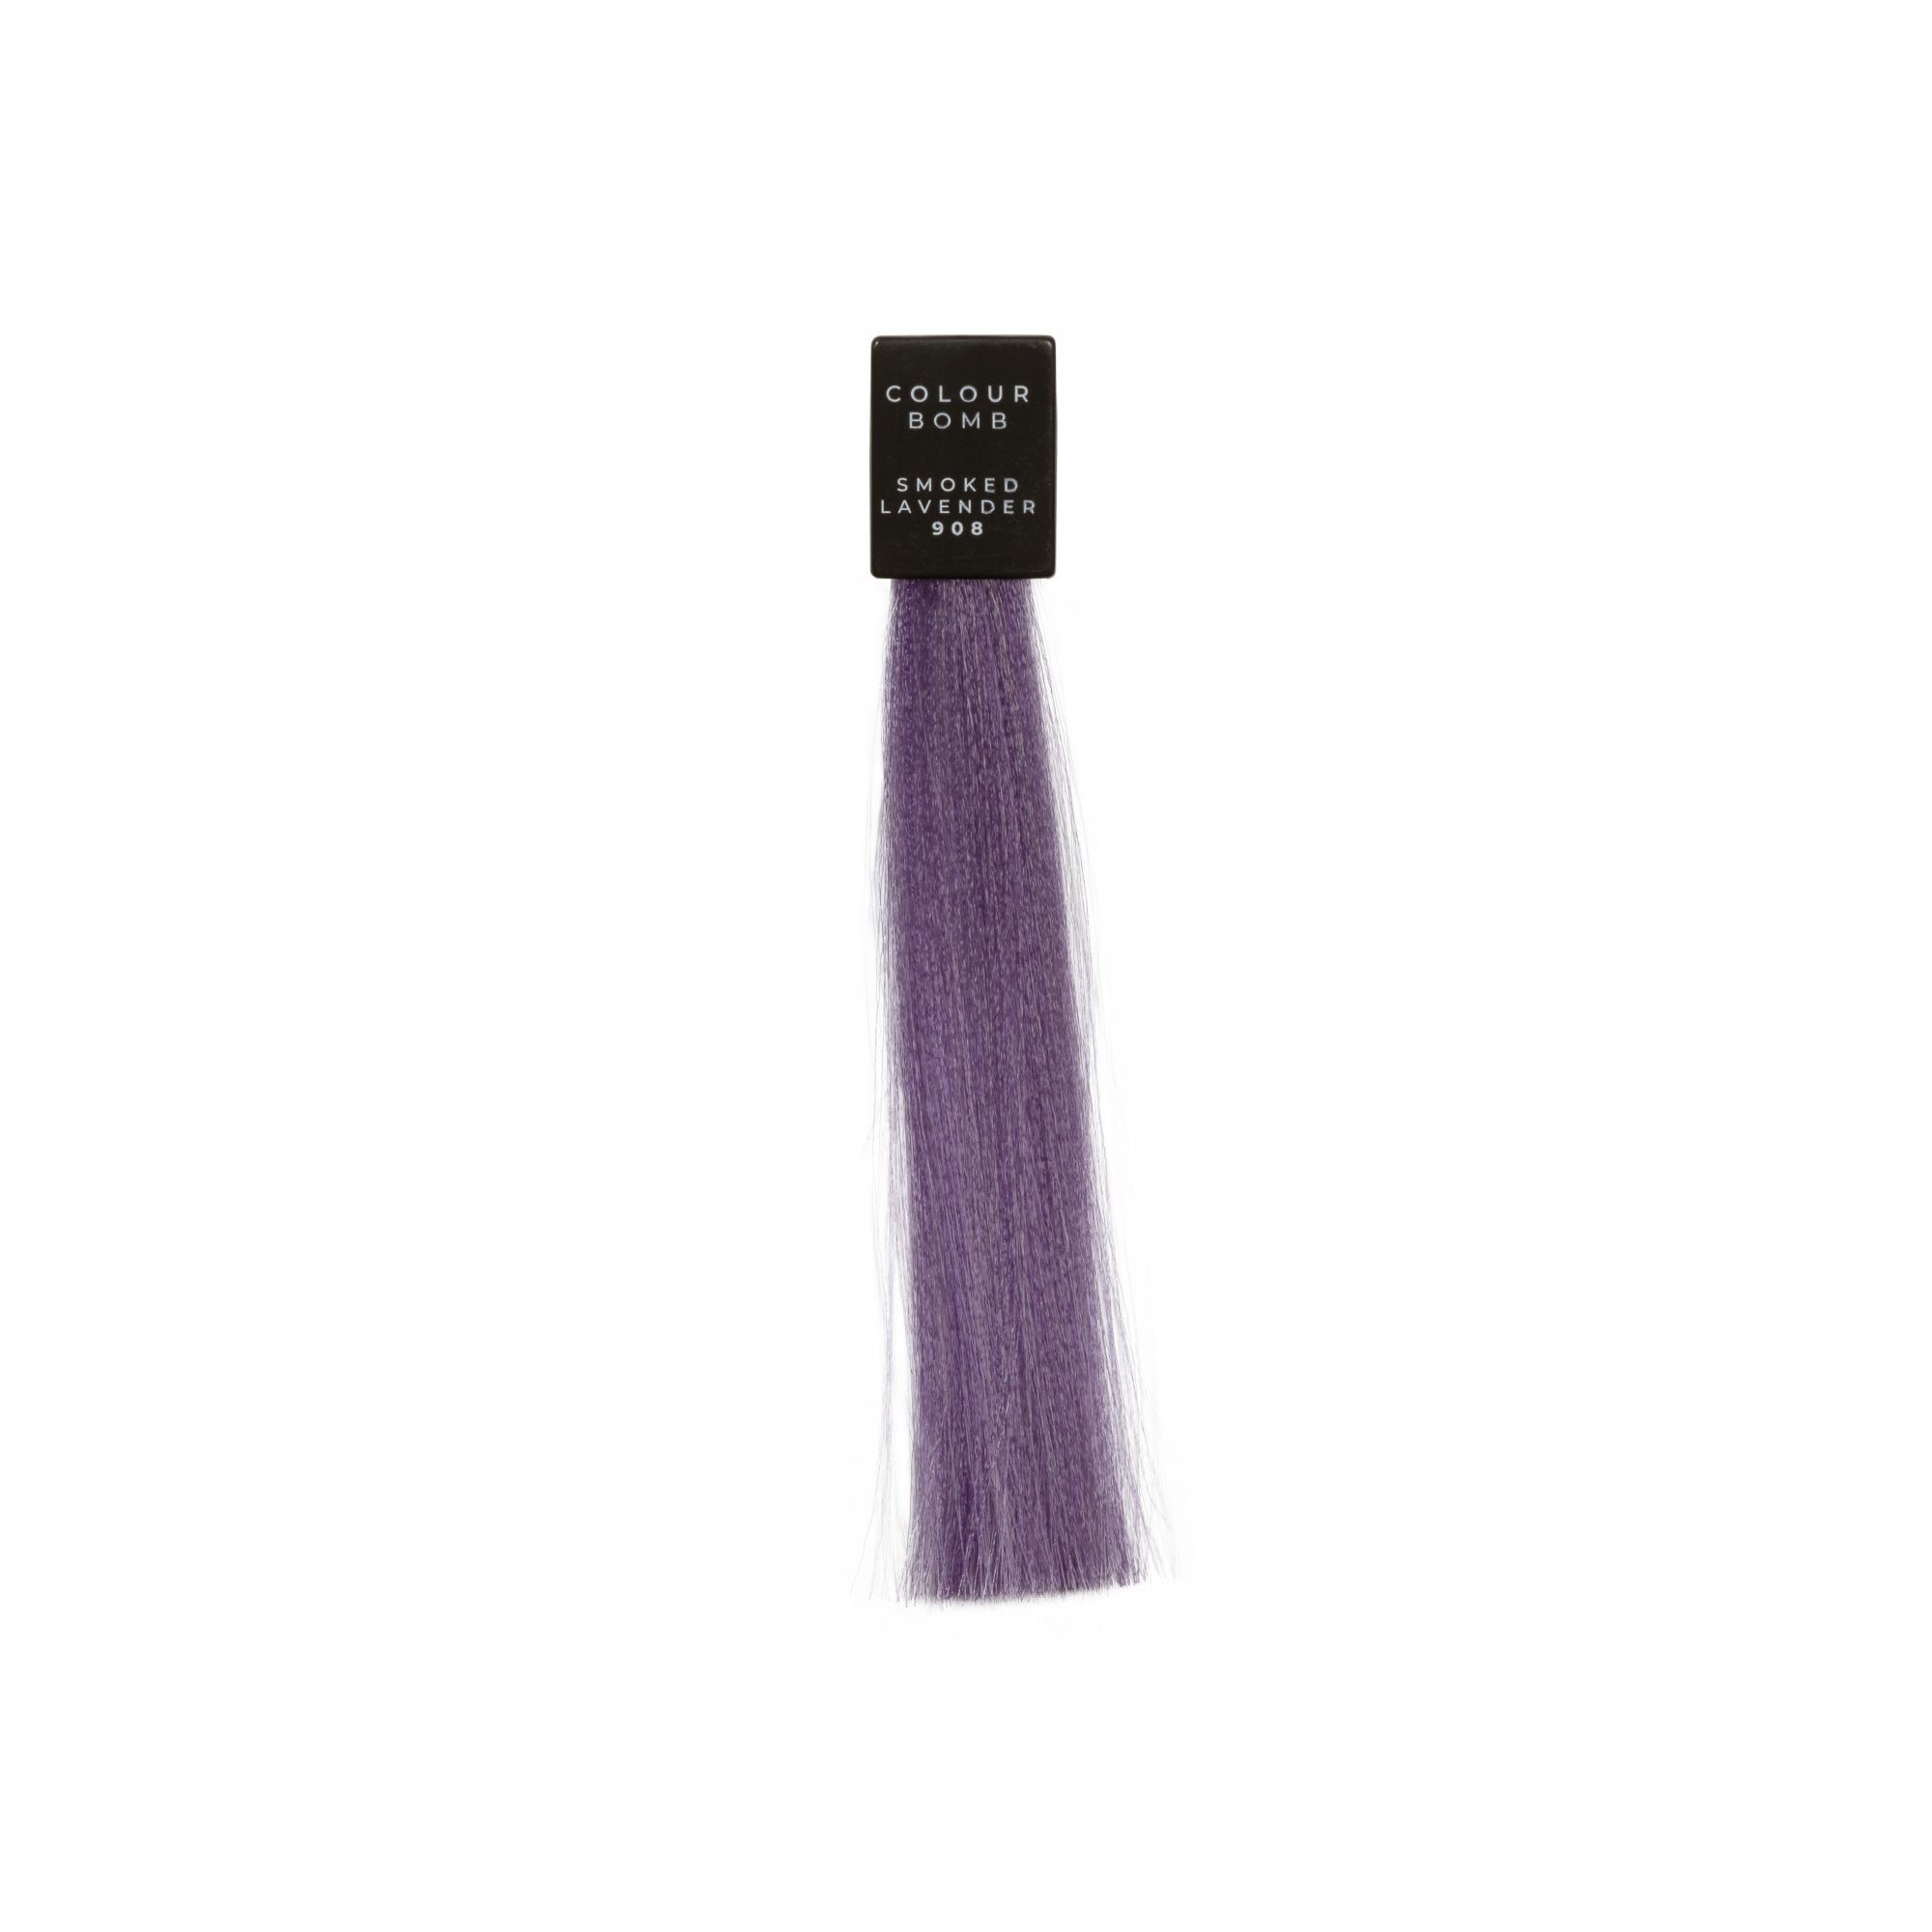 NEW Colour Bomb 200ml - Smoked Lavender